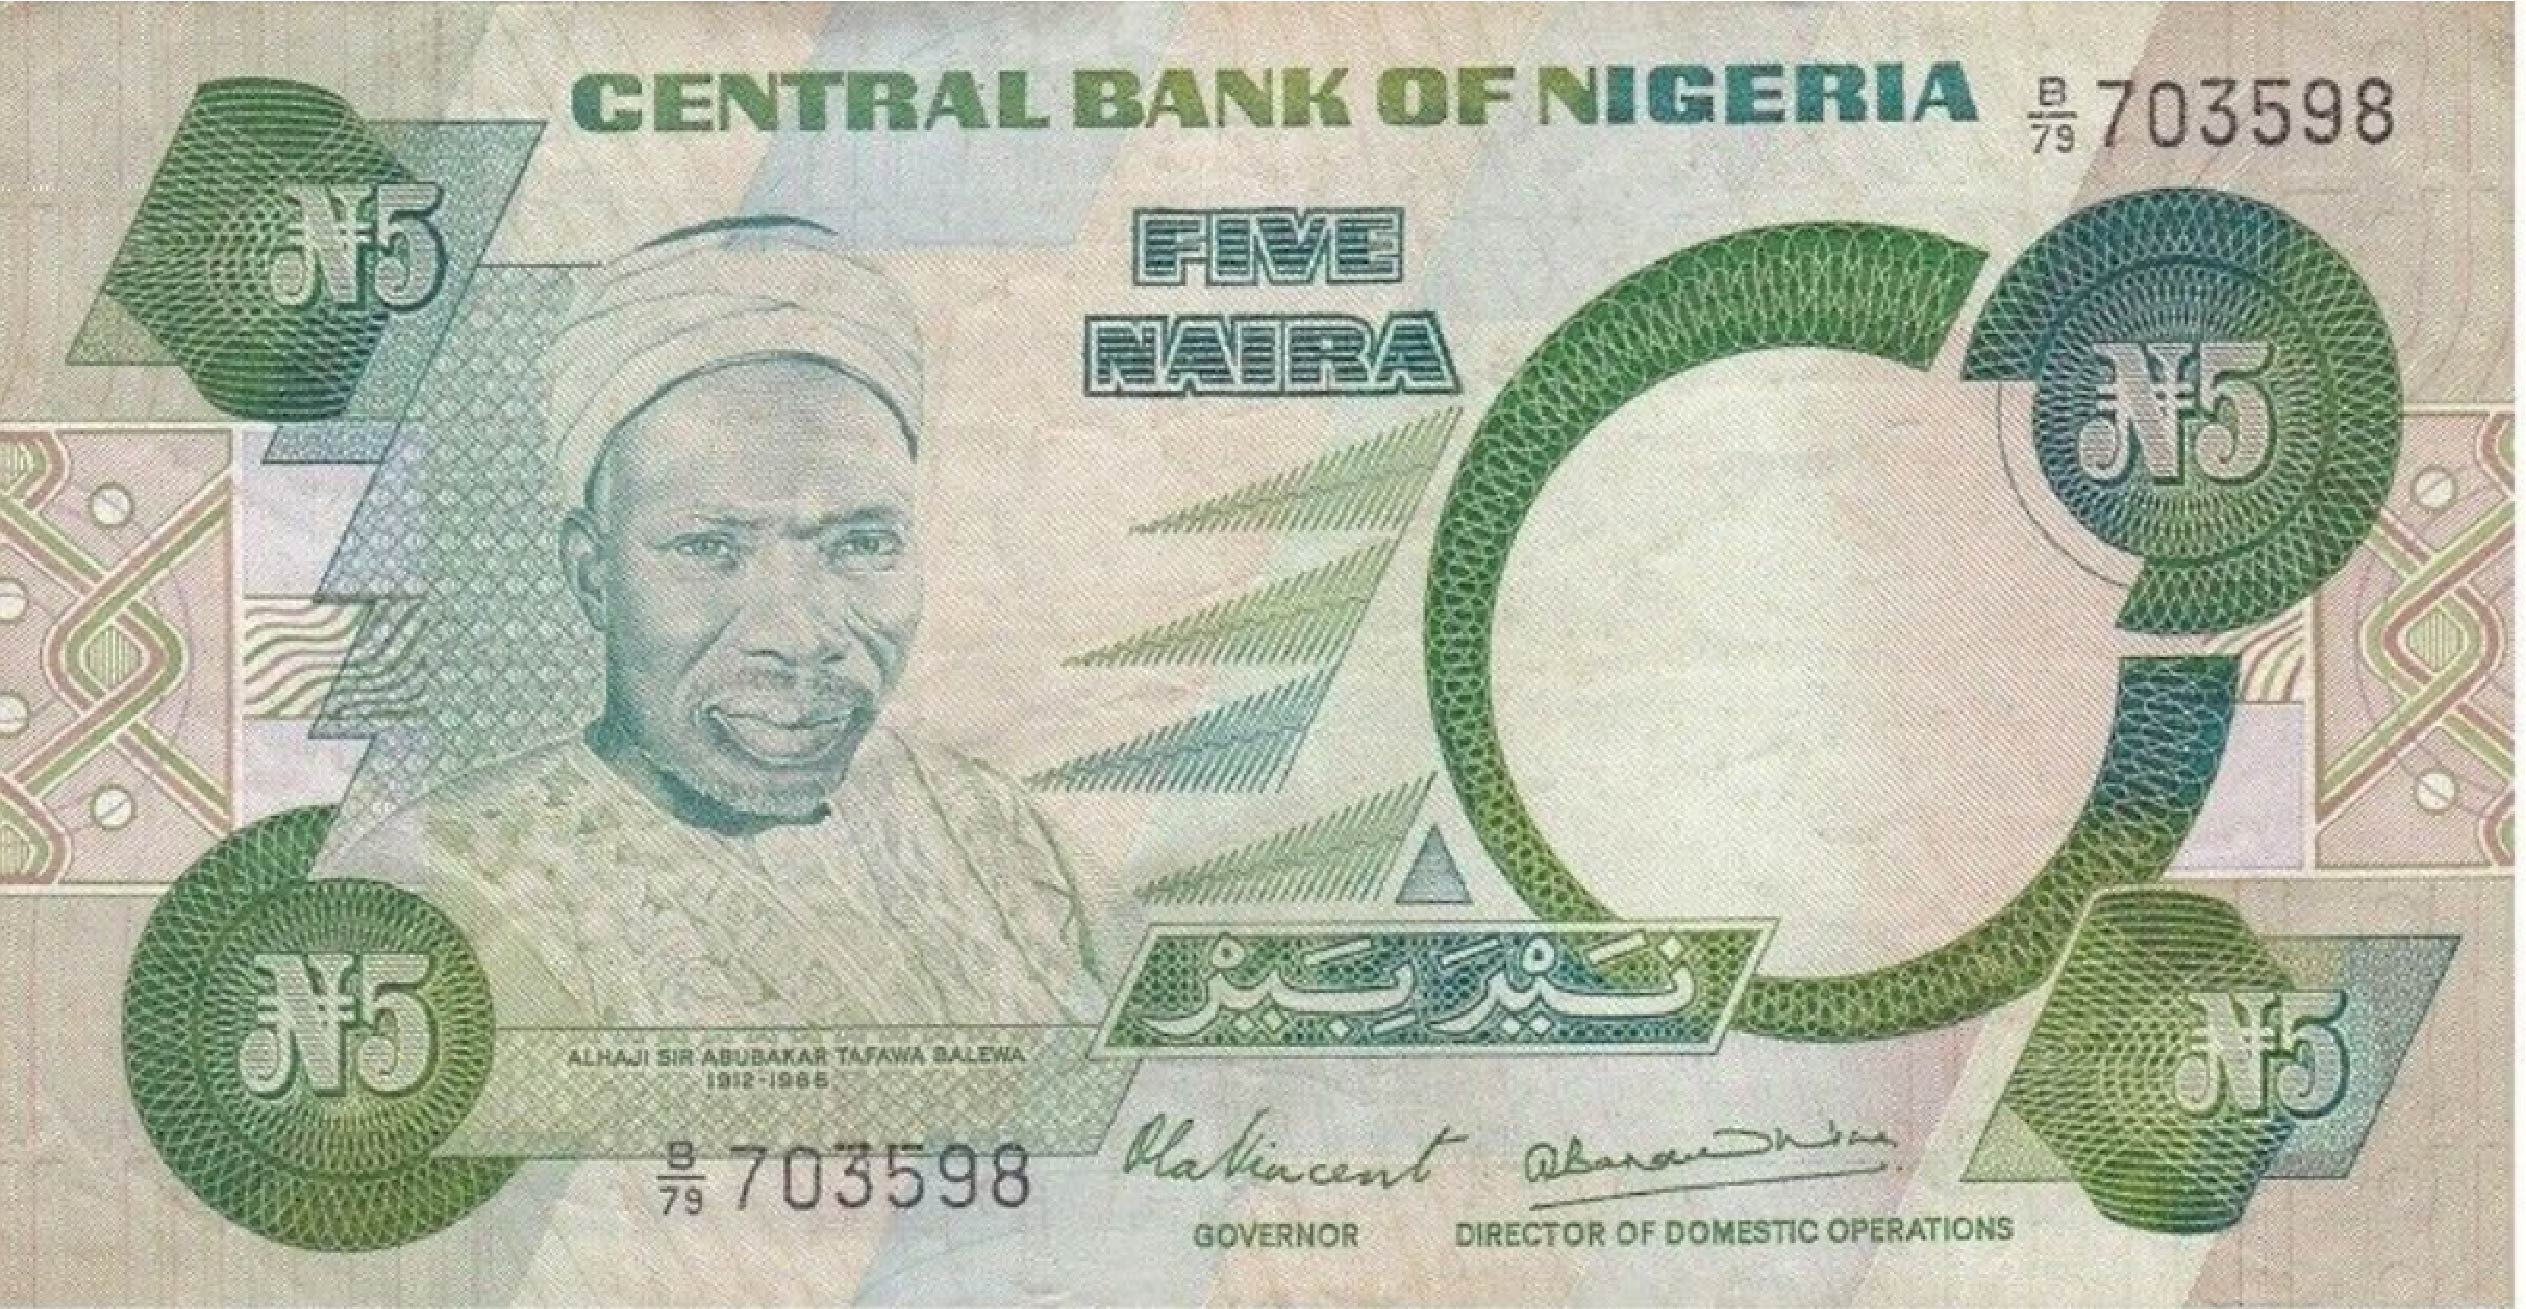 5 Nigerian Naira paper banknote (Tafawa Balewa type 1979)